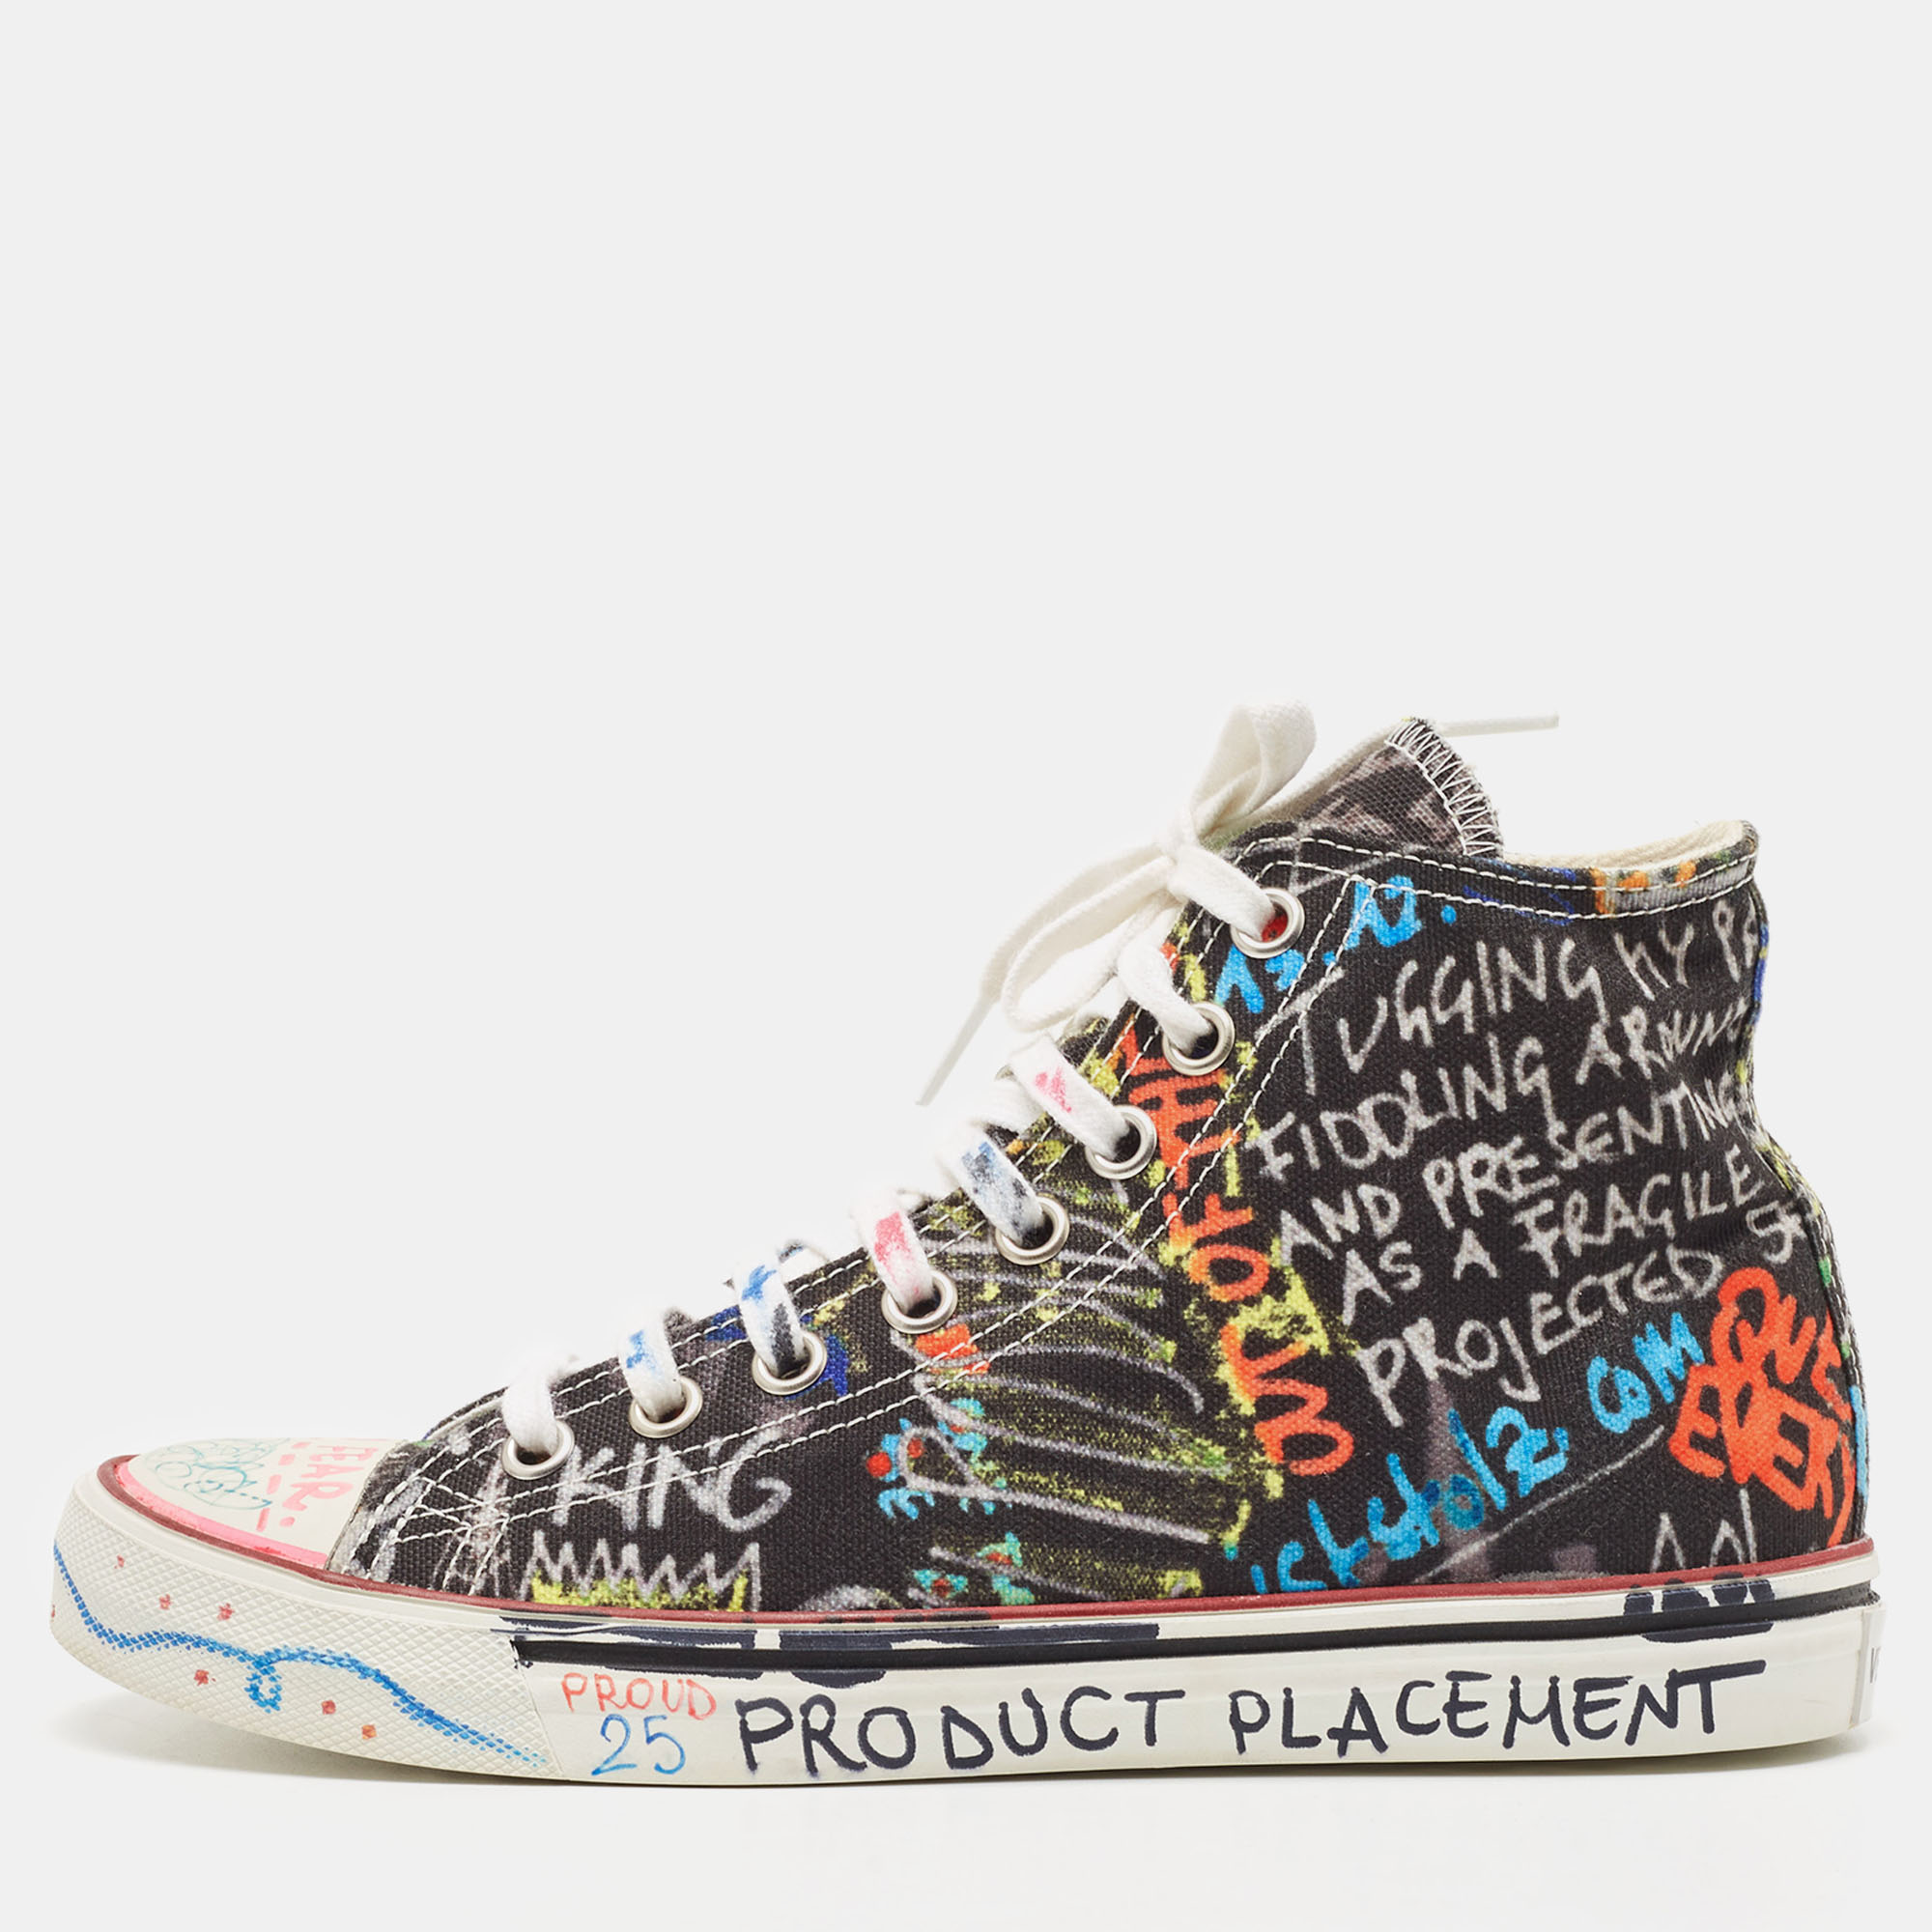 Vetements Multicolor Graffiti Canvas High Top Sneakers Size 39